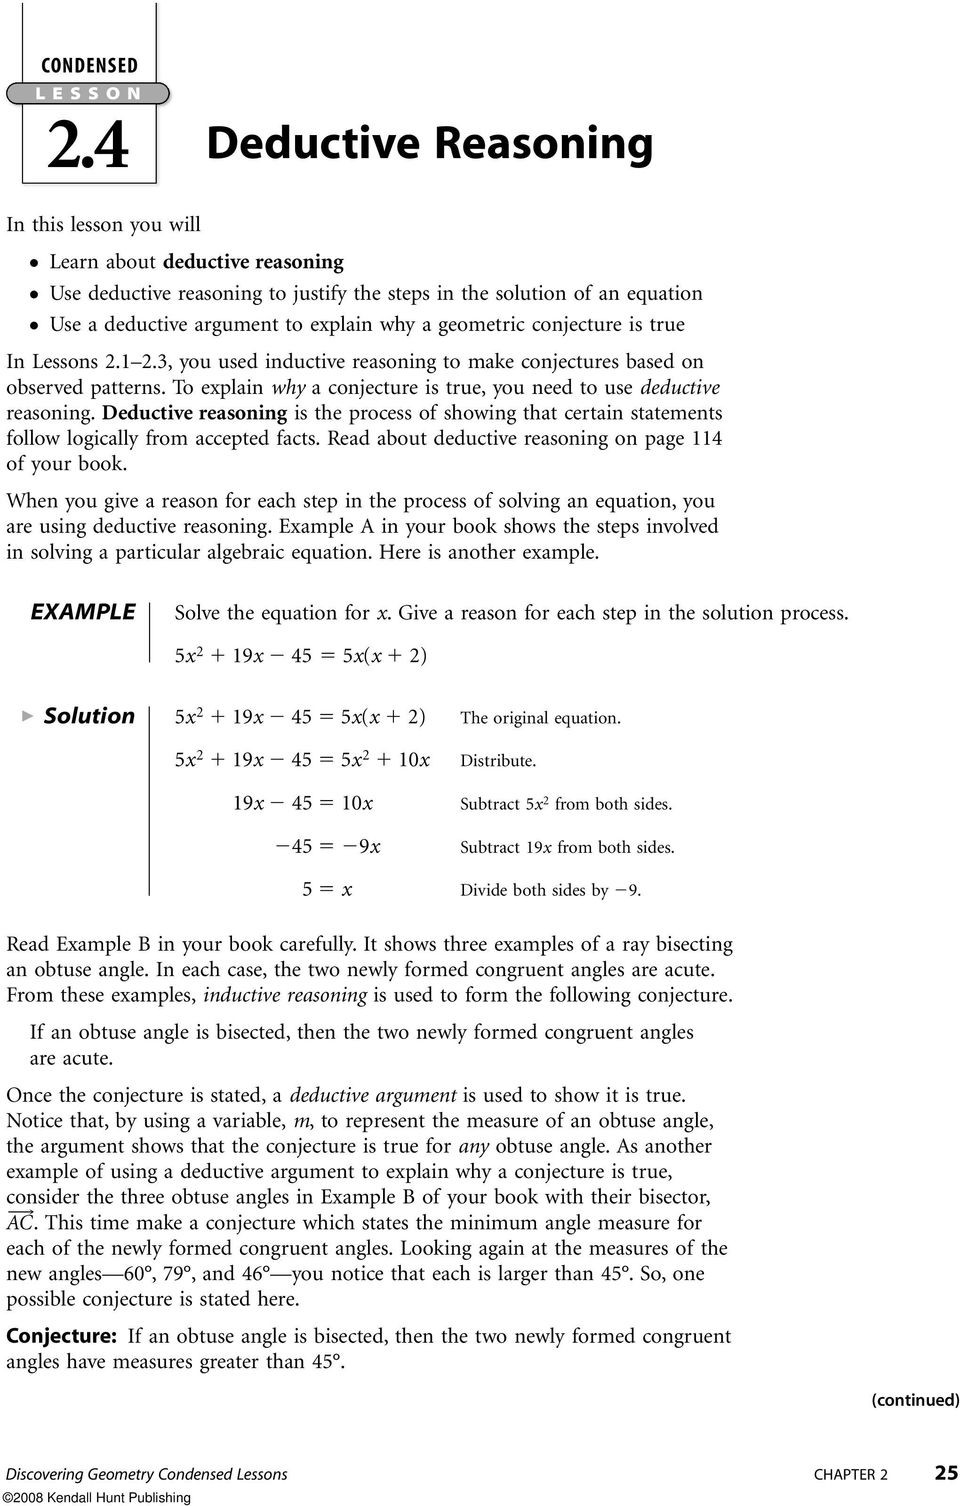 Inductive and Deductive Reasoning Worksheet Patterns and Inductive Reasoning Worksheet and Answers